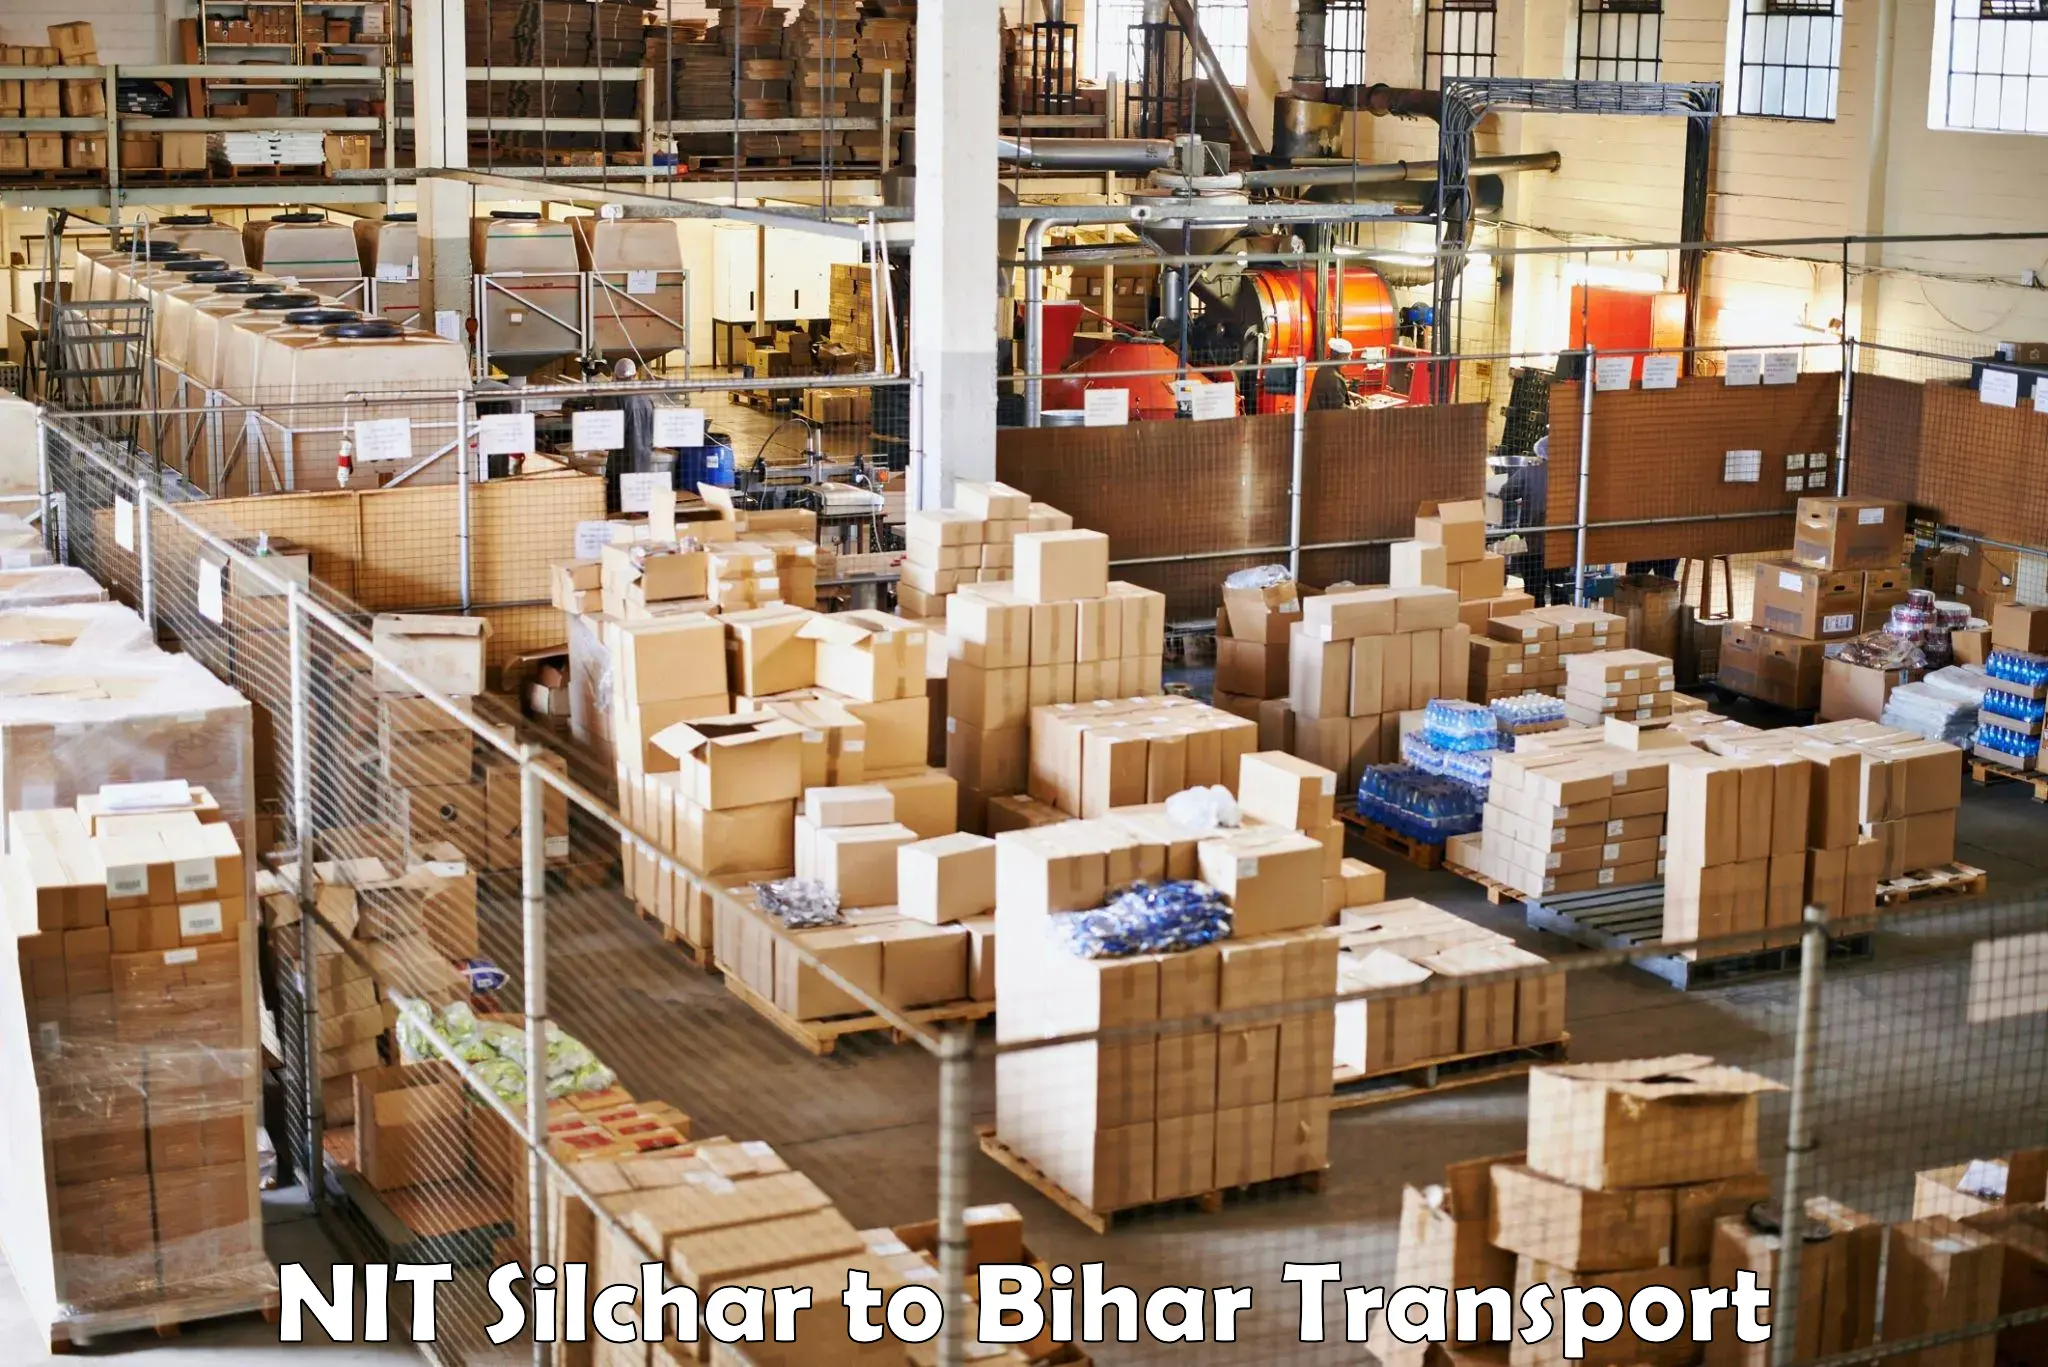 Furniture transport service NIT Silchar to Aurangabad Bihar